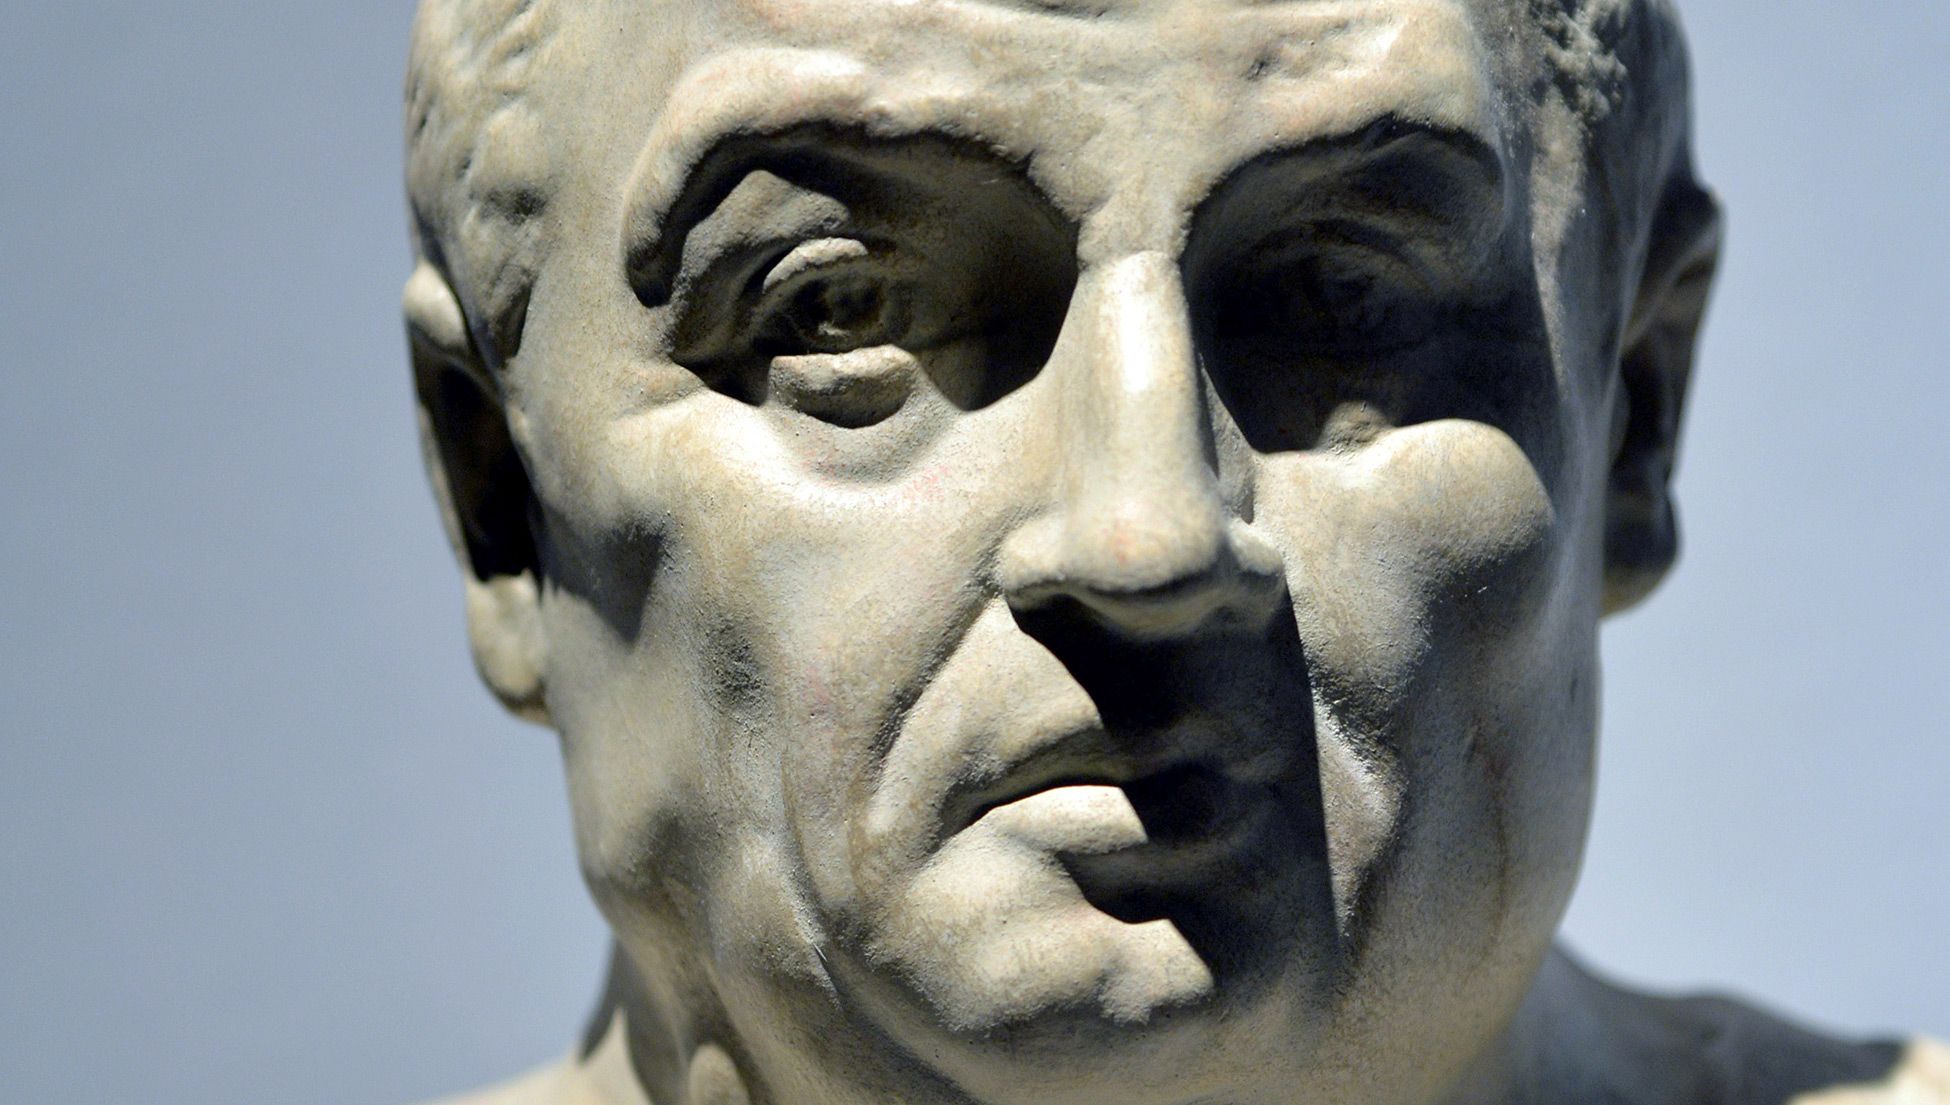 Don’t be stoic: Roman Stoicism’s origins show its perniciousness